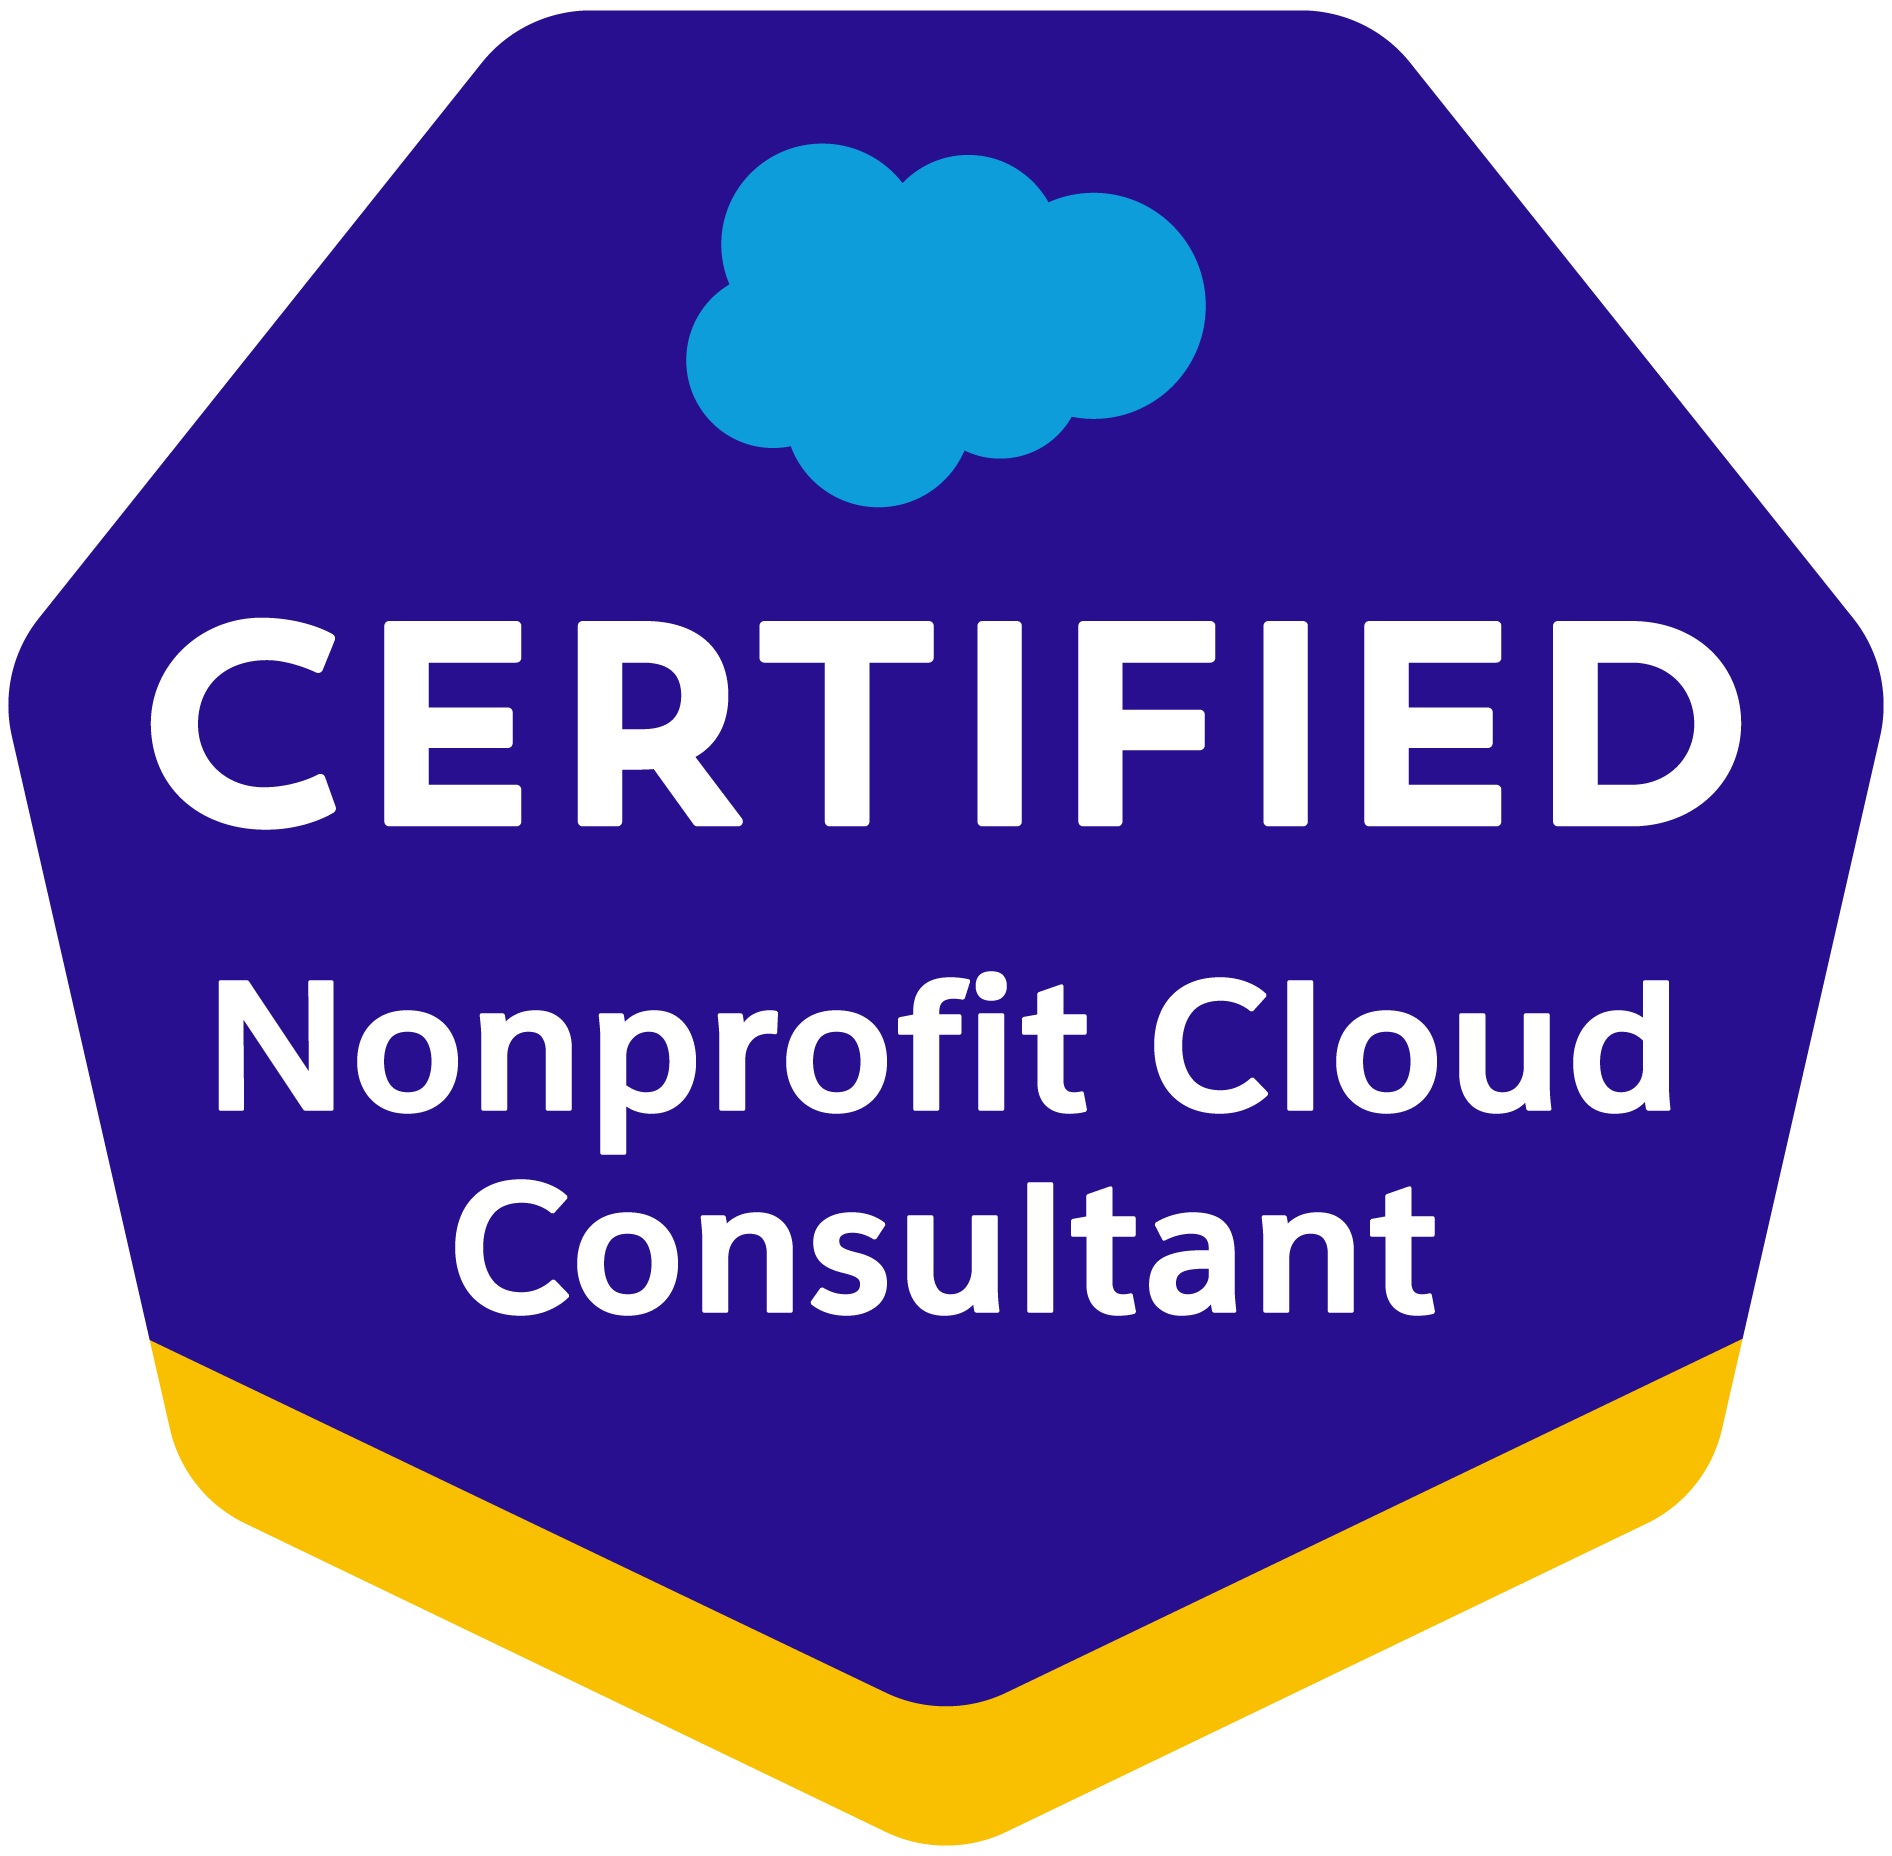 Nonprofit Cloud Consultant certification